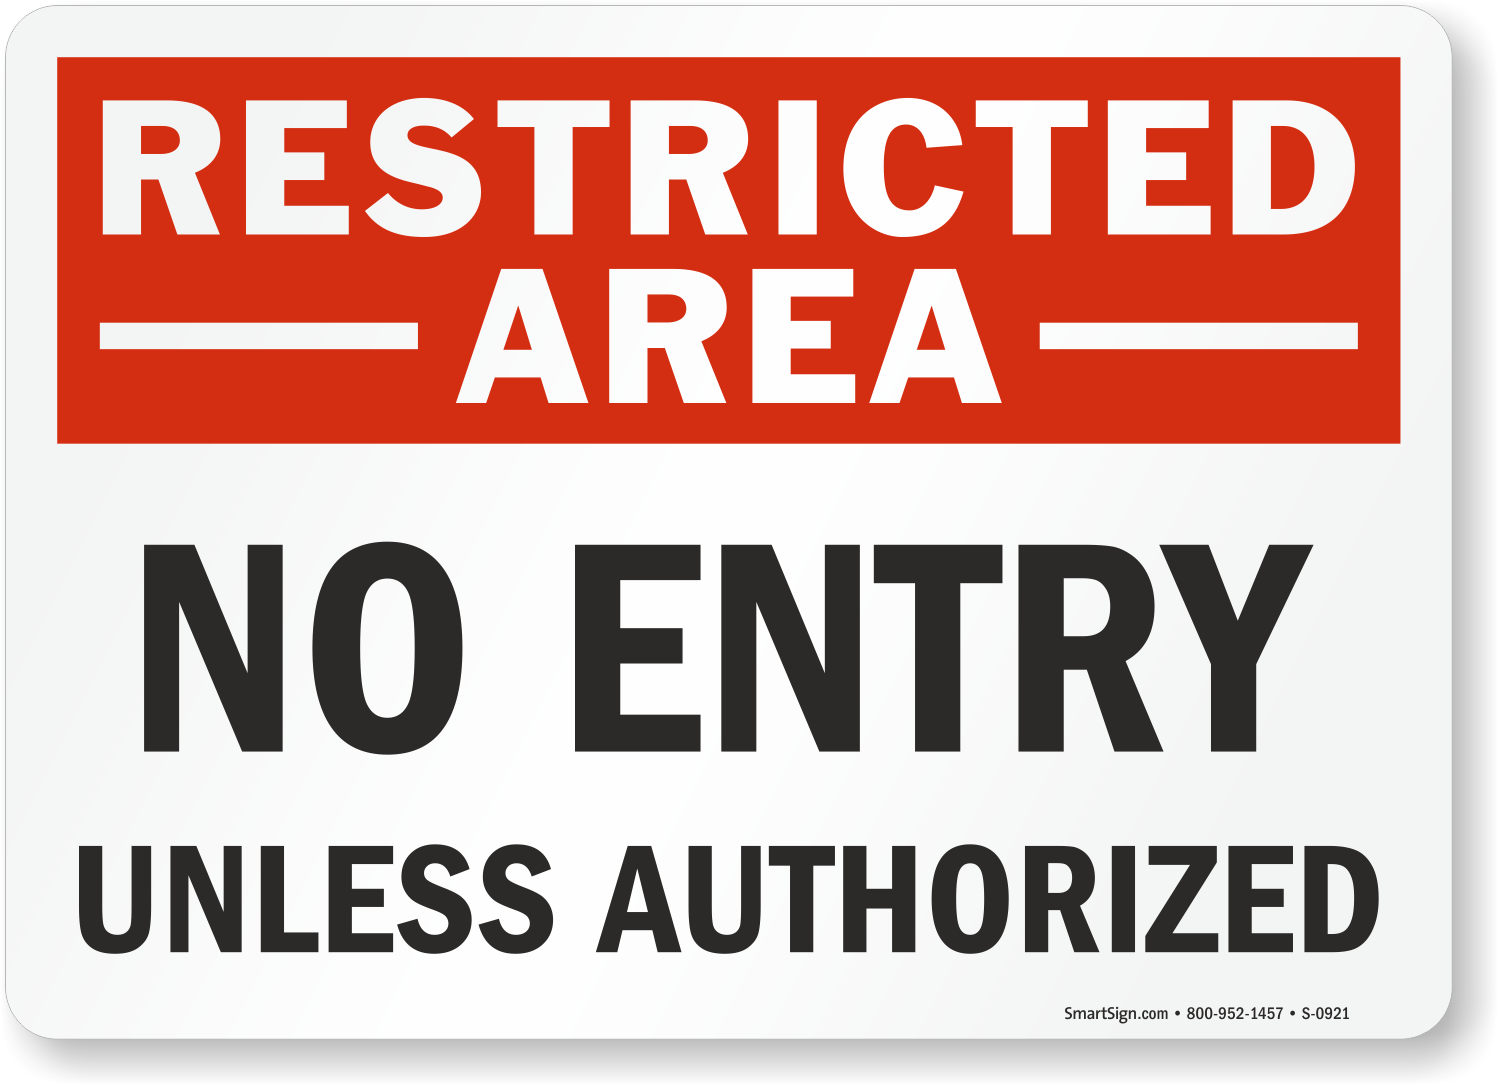 Additional property is not allowed. Restricted area. Warning restricted area. Restricted area sign. Предупреждение на английском.